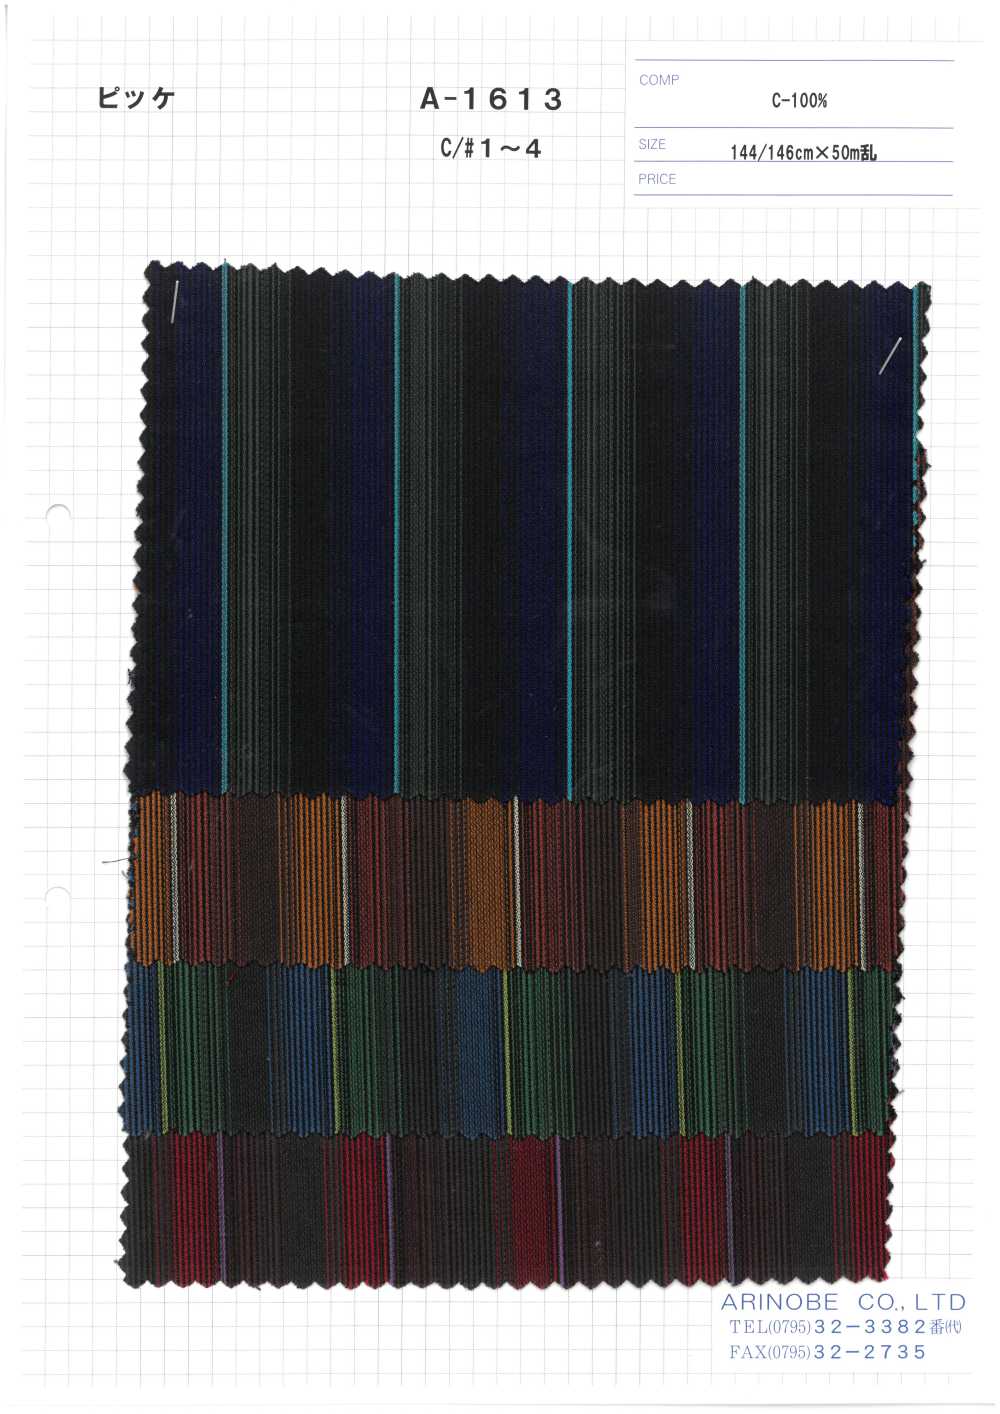 A-1613 Piqué De Algodón[Fabrica Textil] ARINOBE CO., LTD.